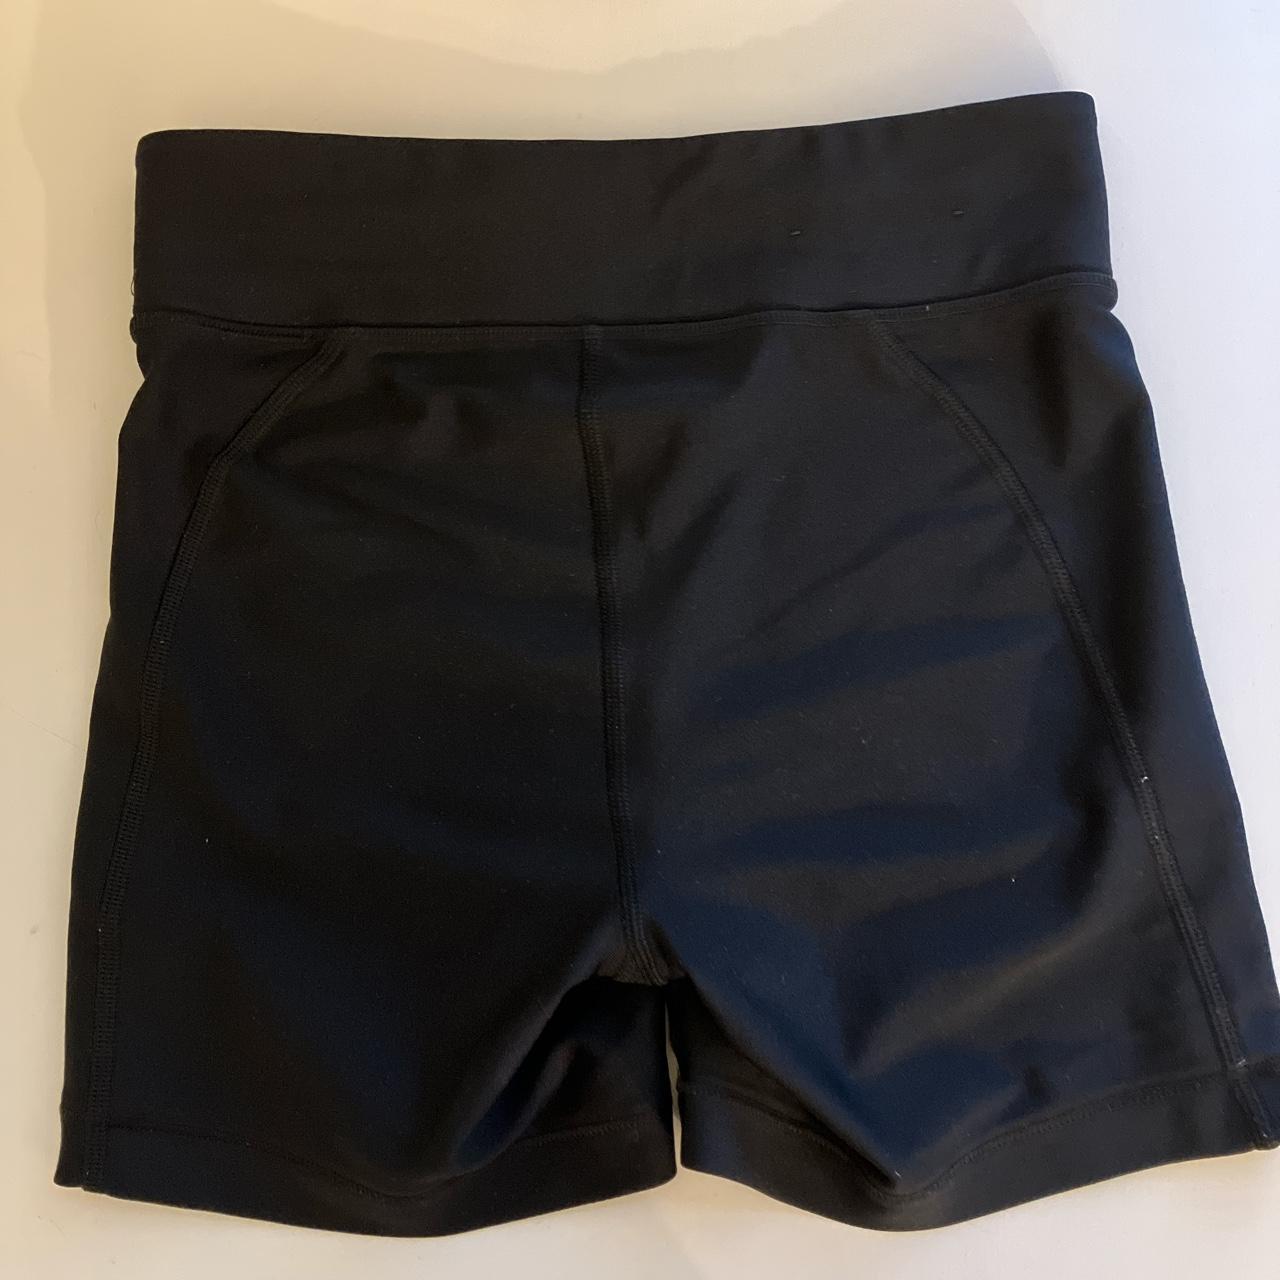 XS women’s spandex/compression shorts. Under Armour